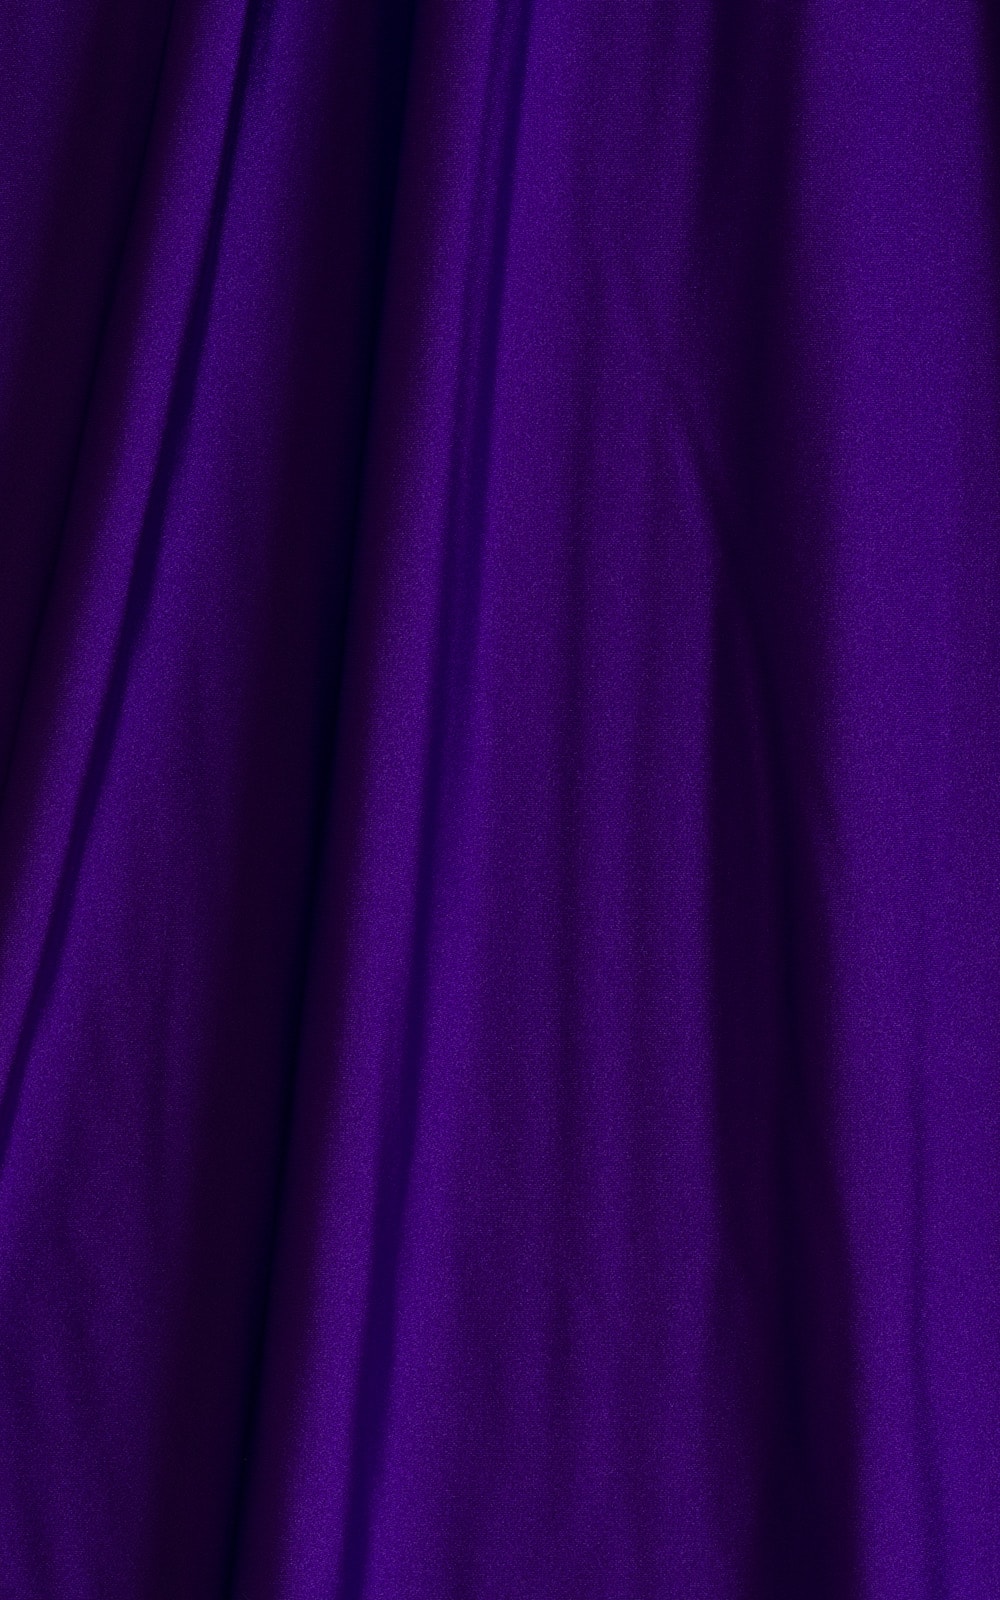 Posing Suit - Competition Bikini Cut in Royal Purple Fabric